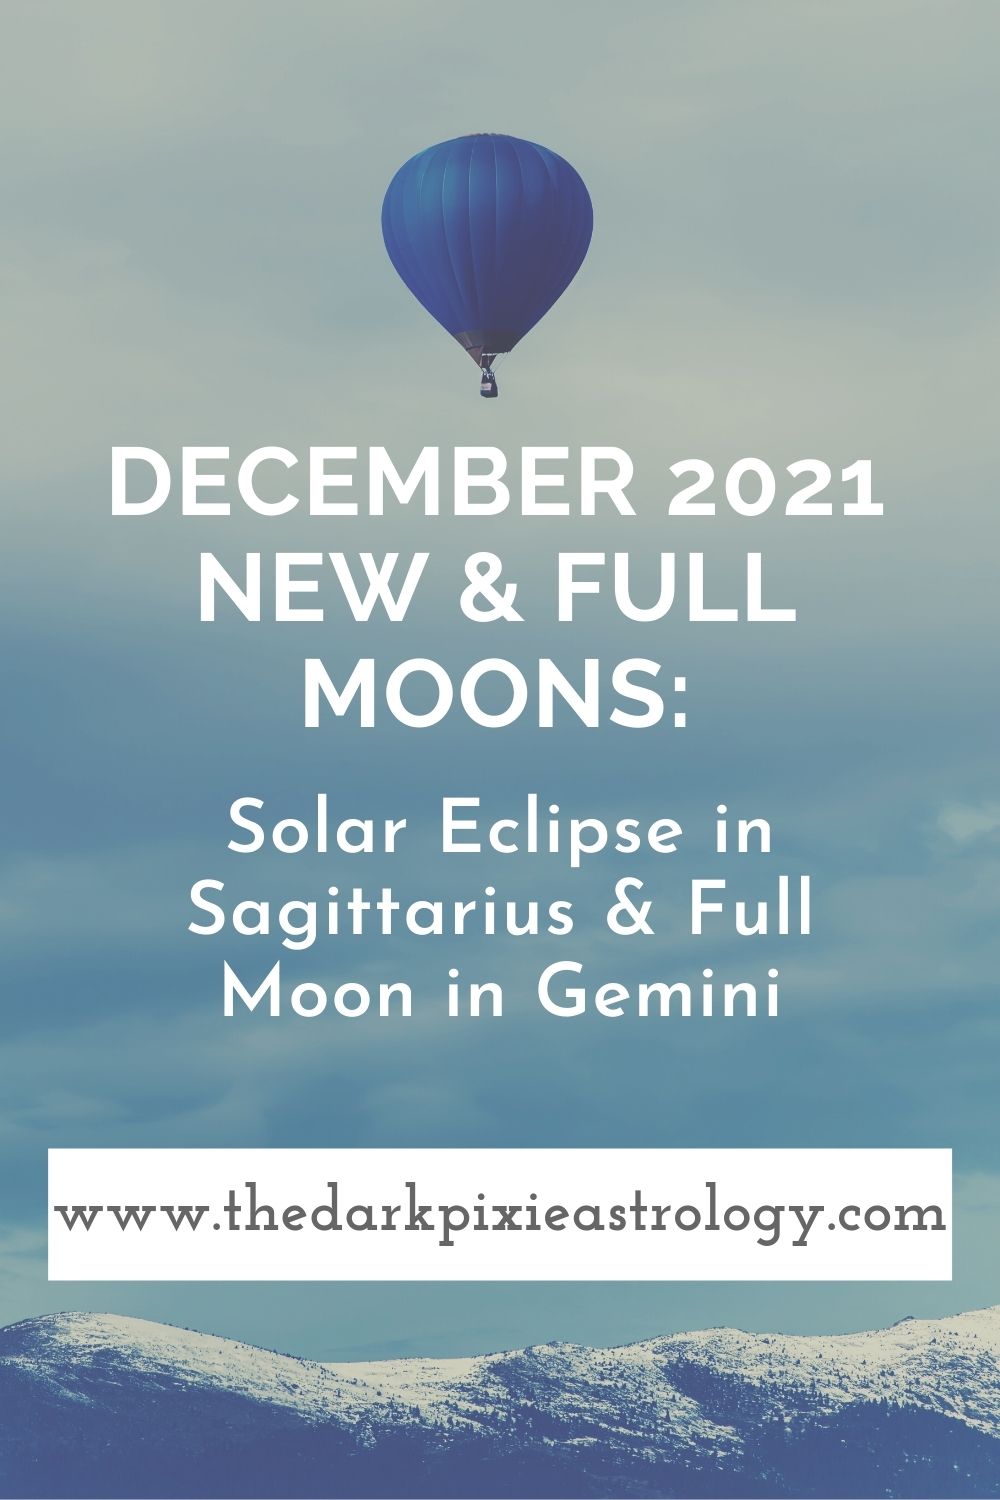 December 2021 New & Full Moons: Solar Eclipse in Sagittarius & Full Moon in Gemini - The Dark Pixie Astrology